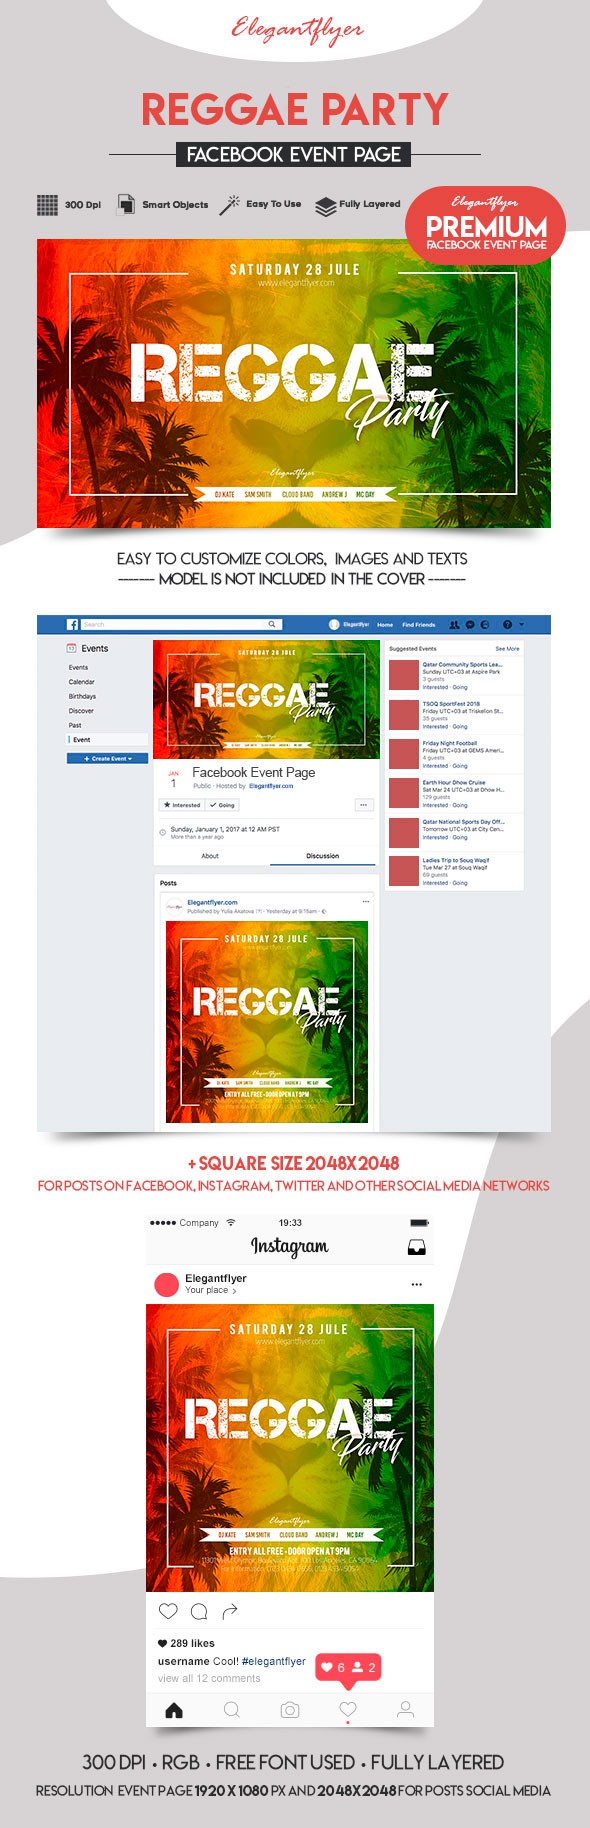 Reggae-Party Facebook by ElegantFlyer